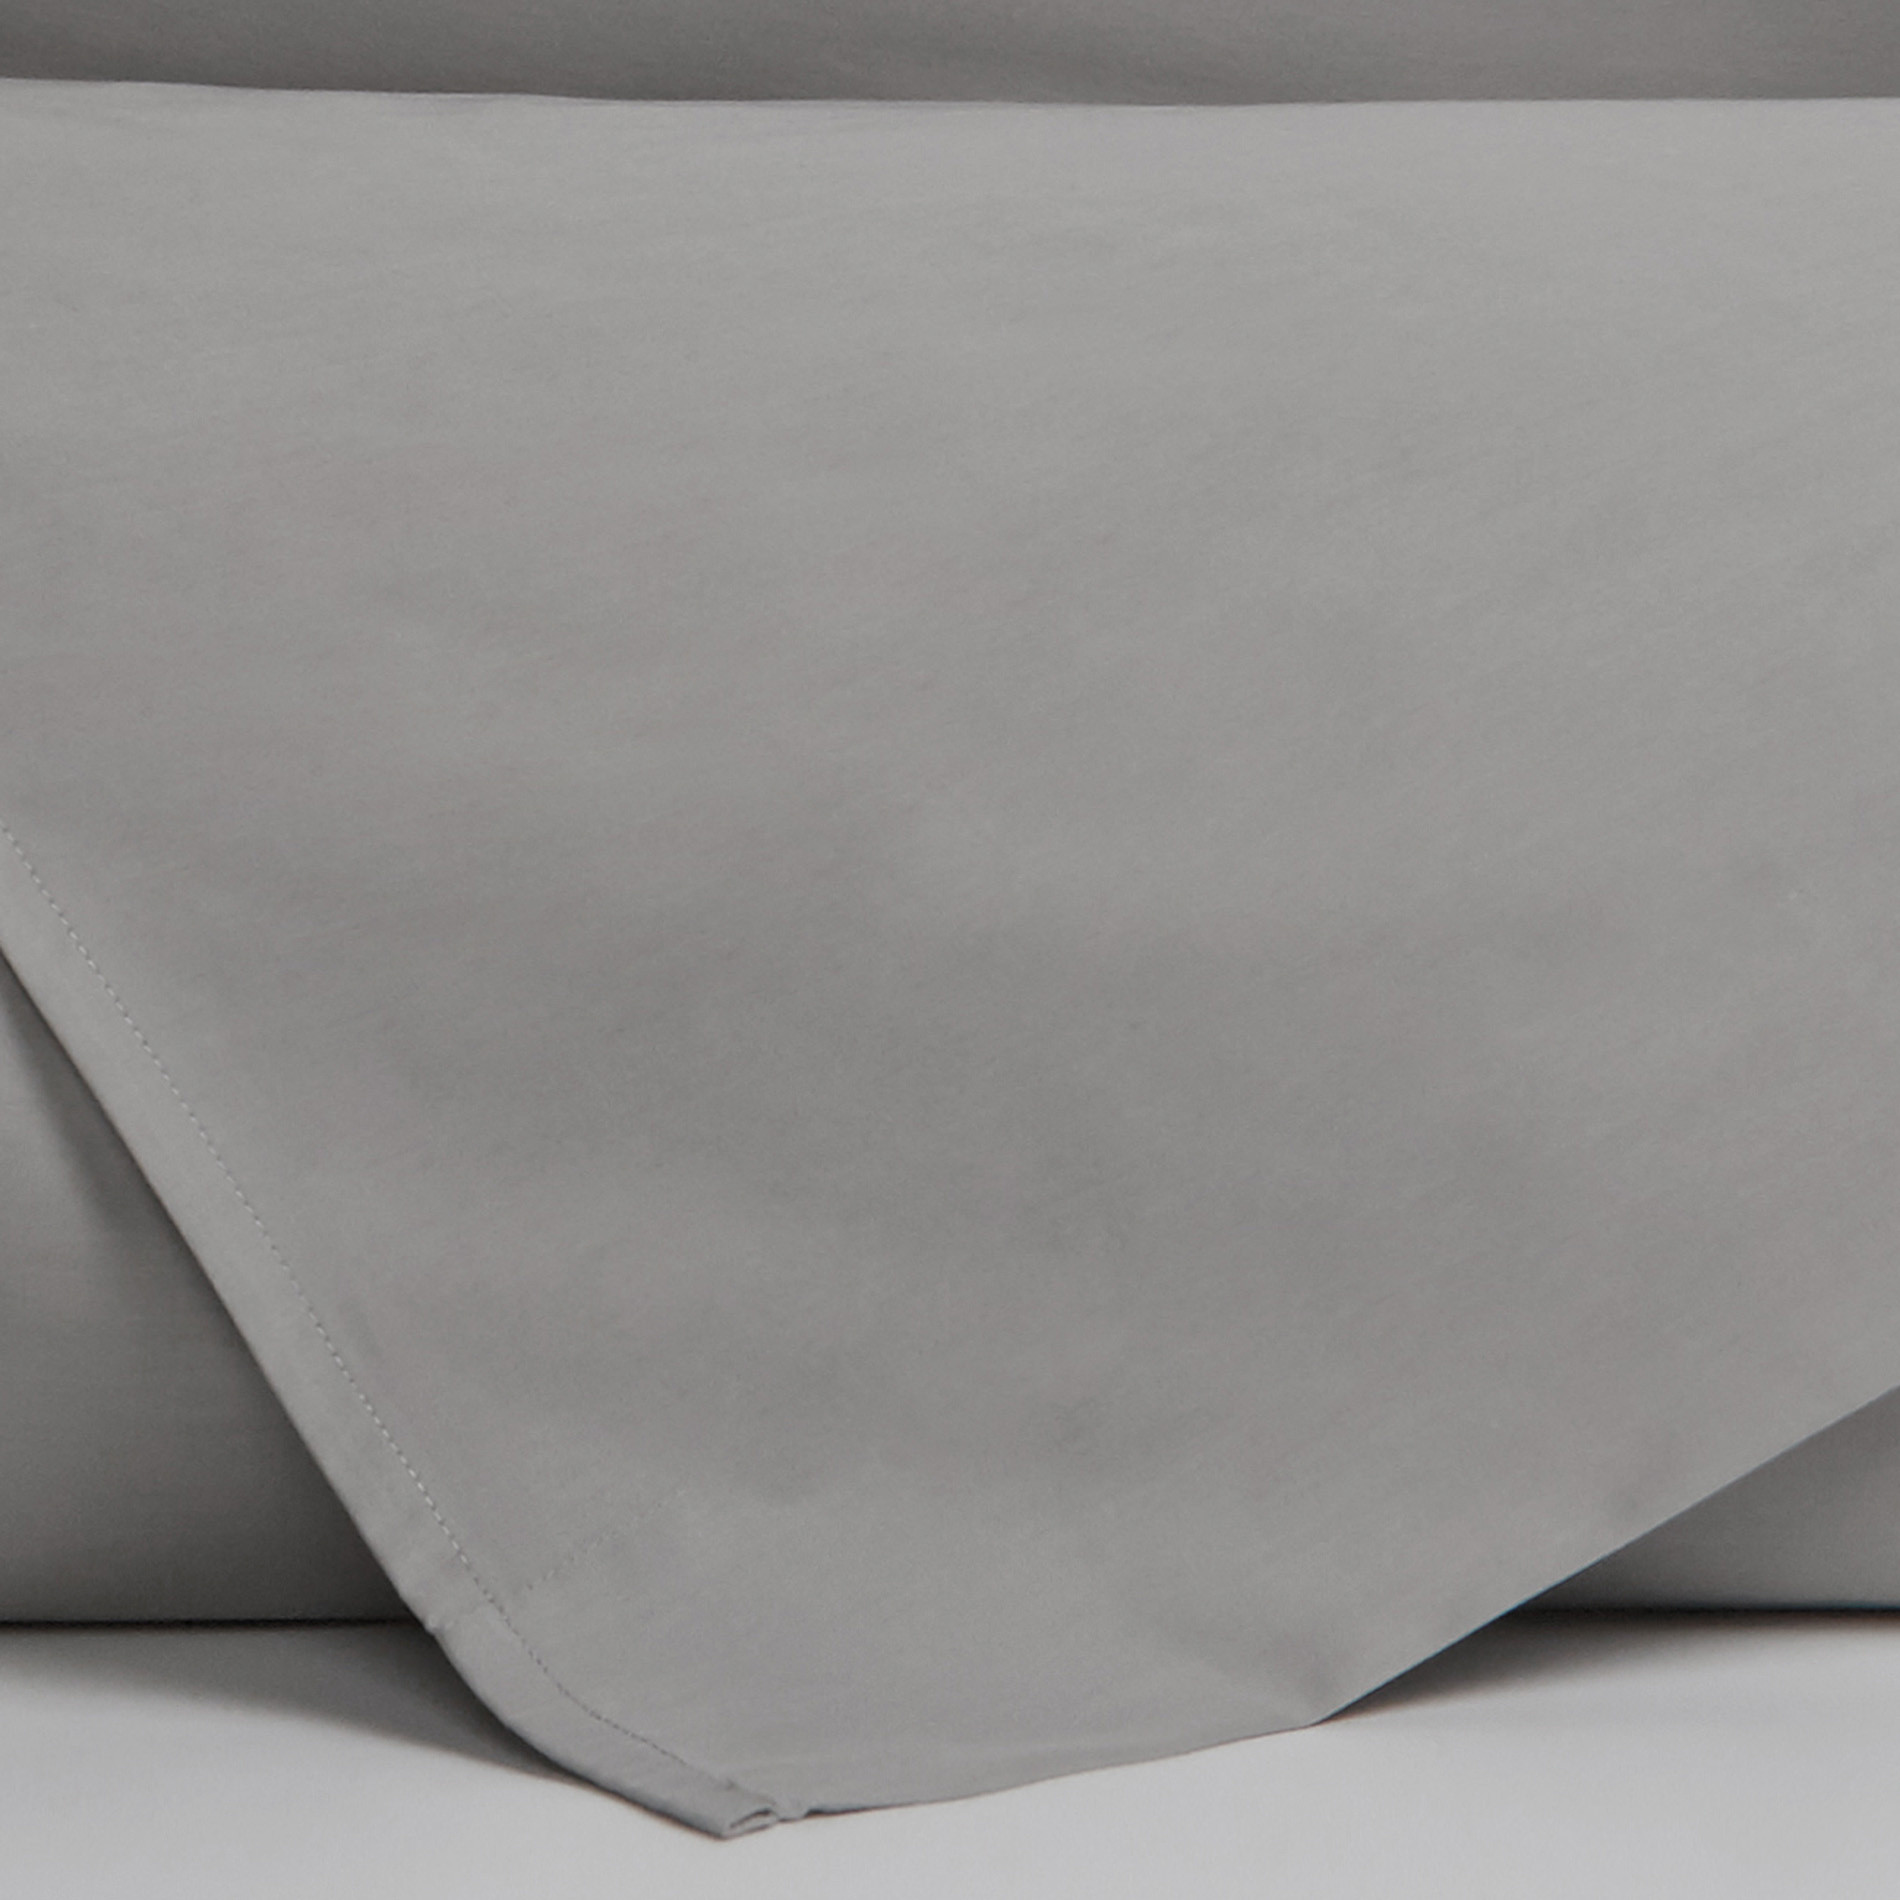 Zefiro duvet cover set in 100% cotton satin, Grey, large image number 1